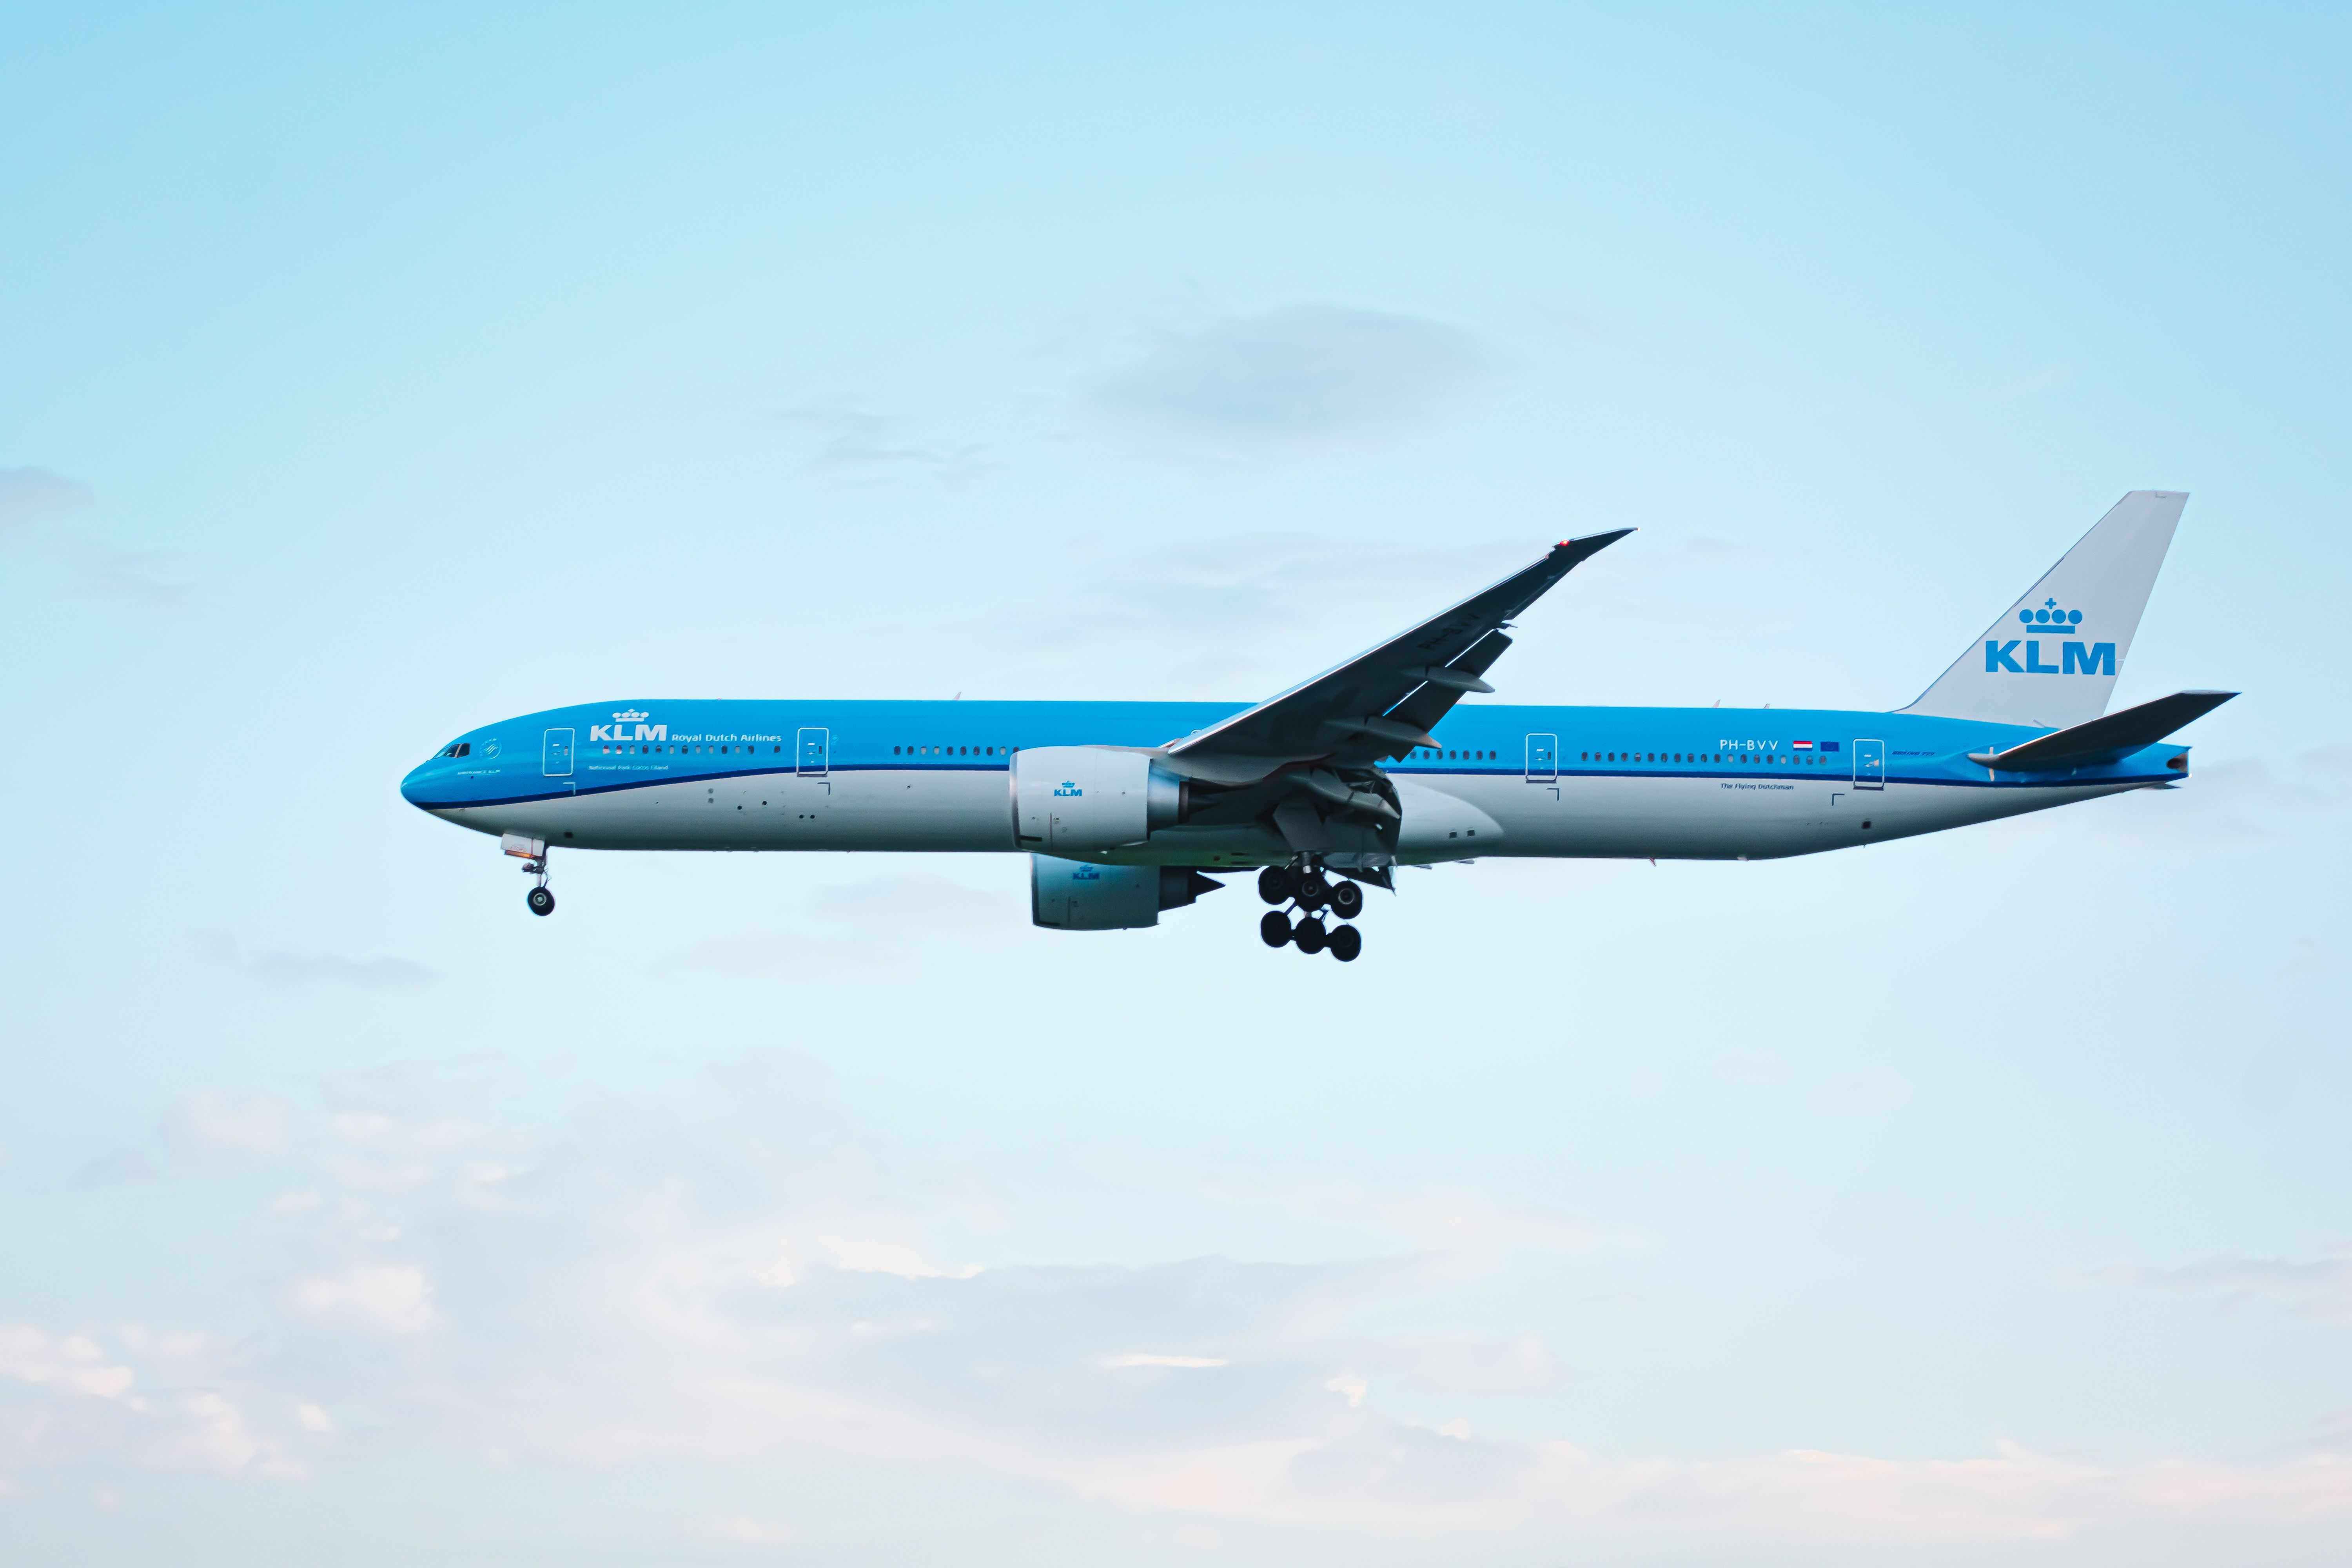 KLM Boeing 777-300ER landing at GRU